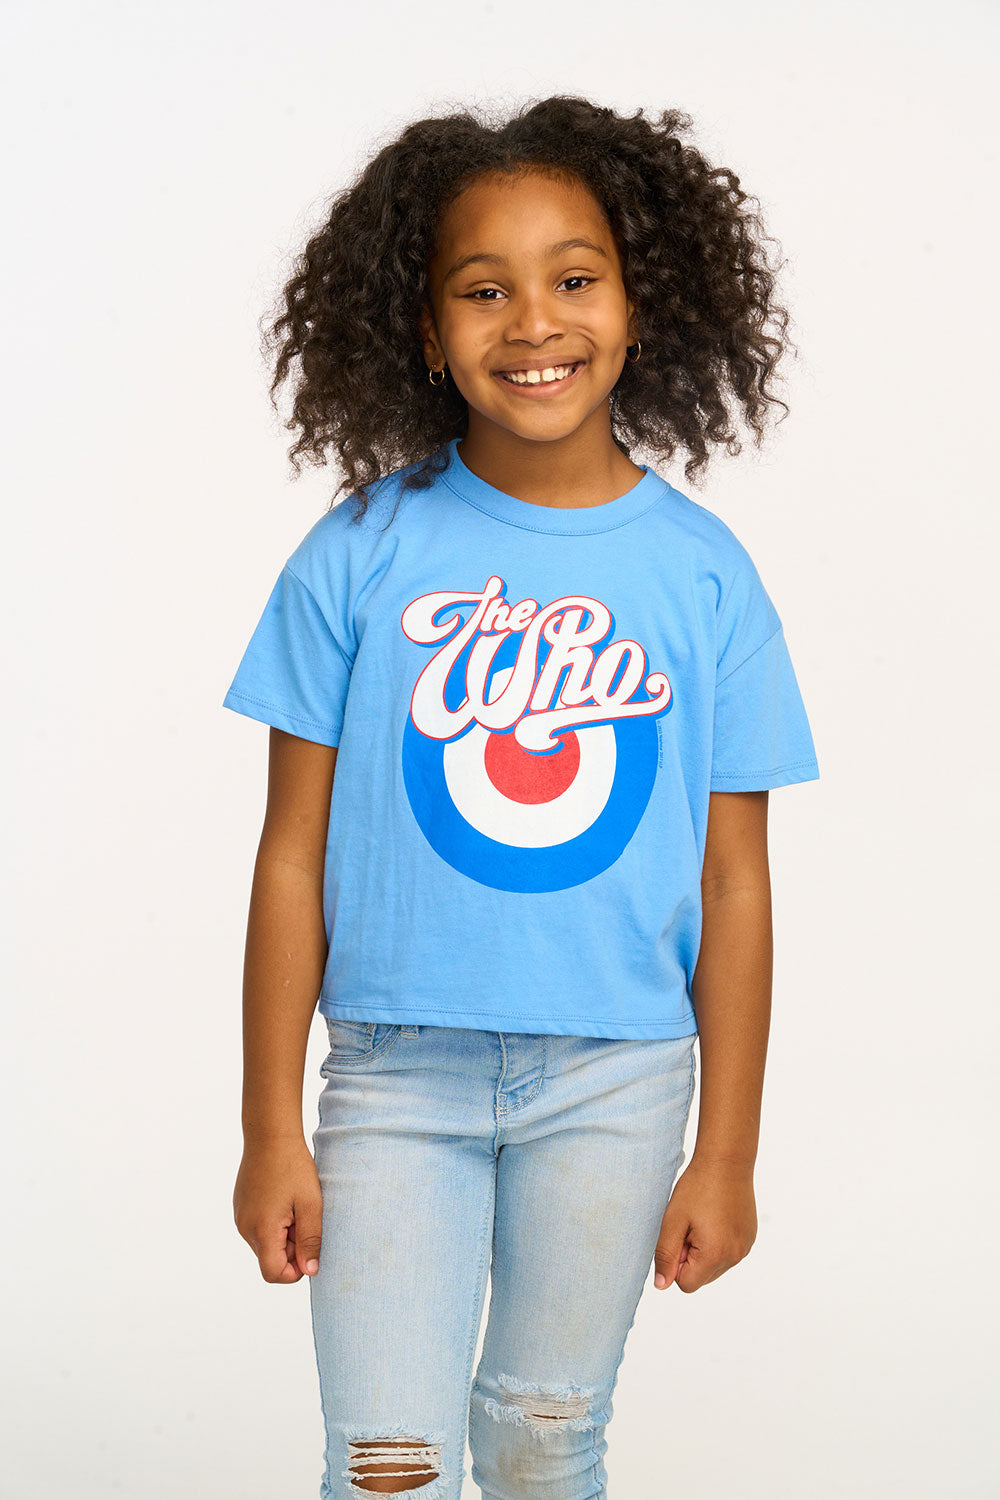 The Who - Target Logo Light Blue Shirt